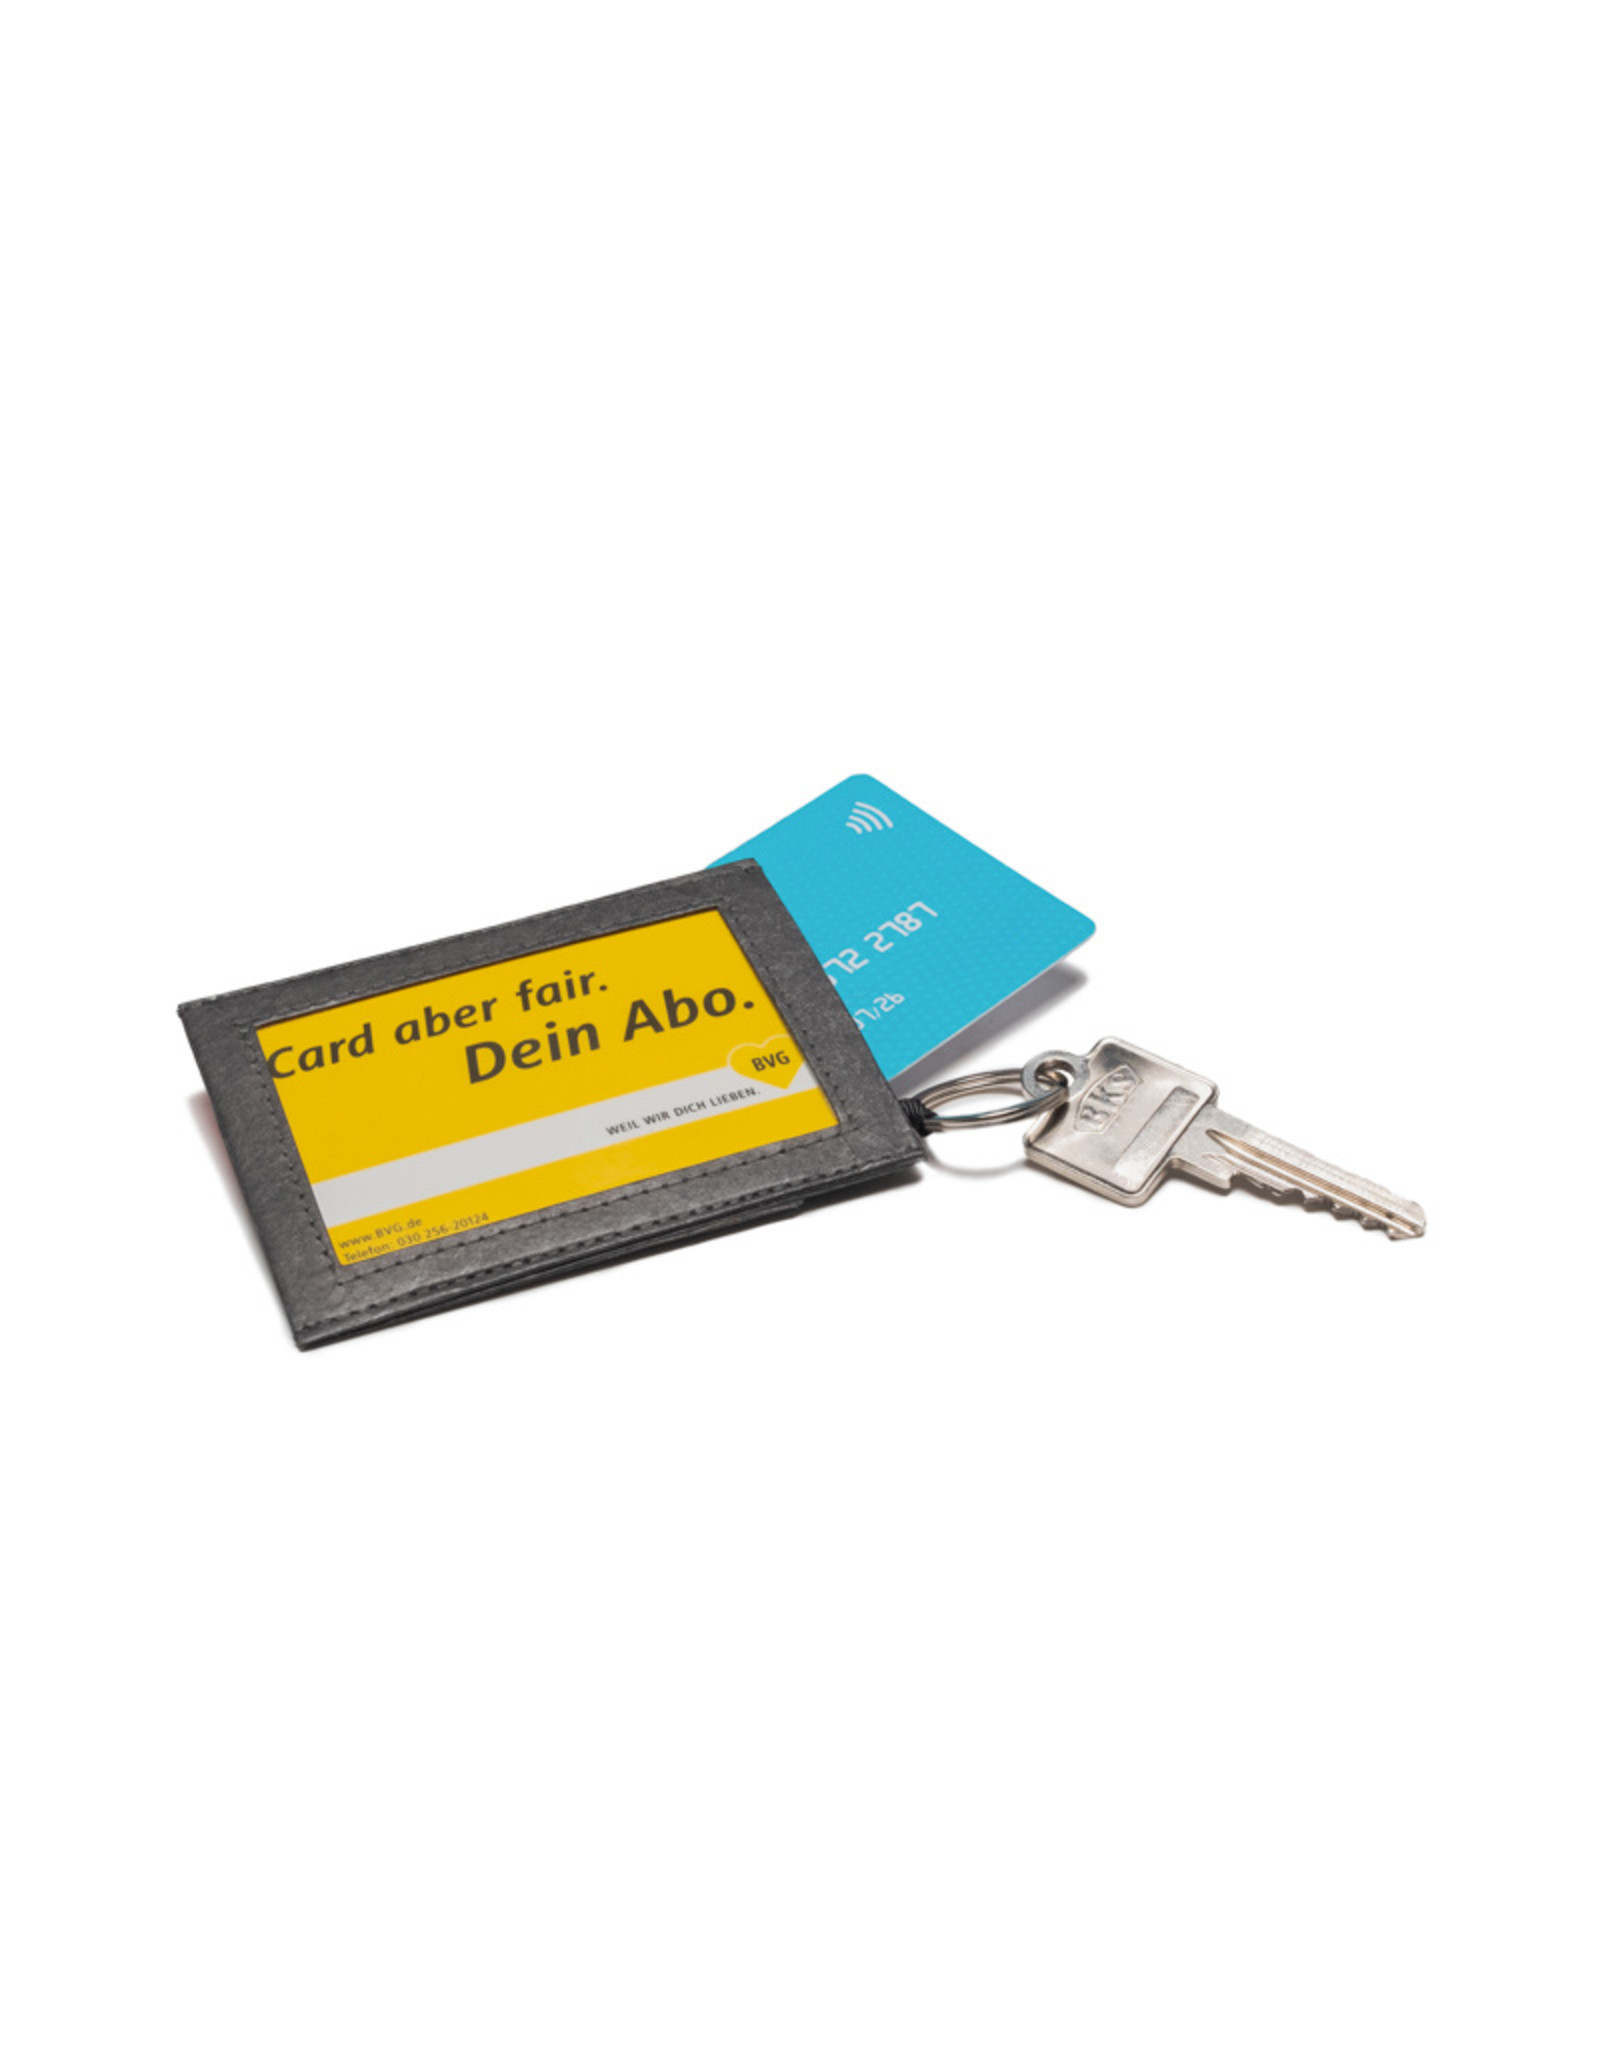 Paprcuts RFID Portemonnaie Pro - VHS Tyvek